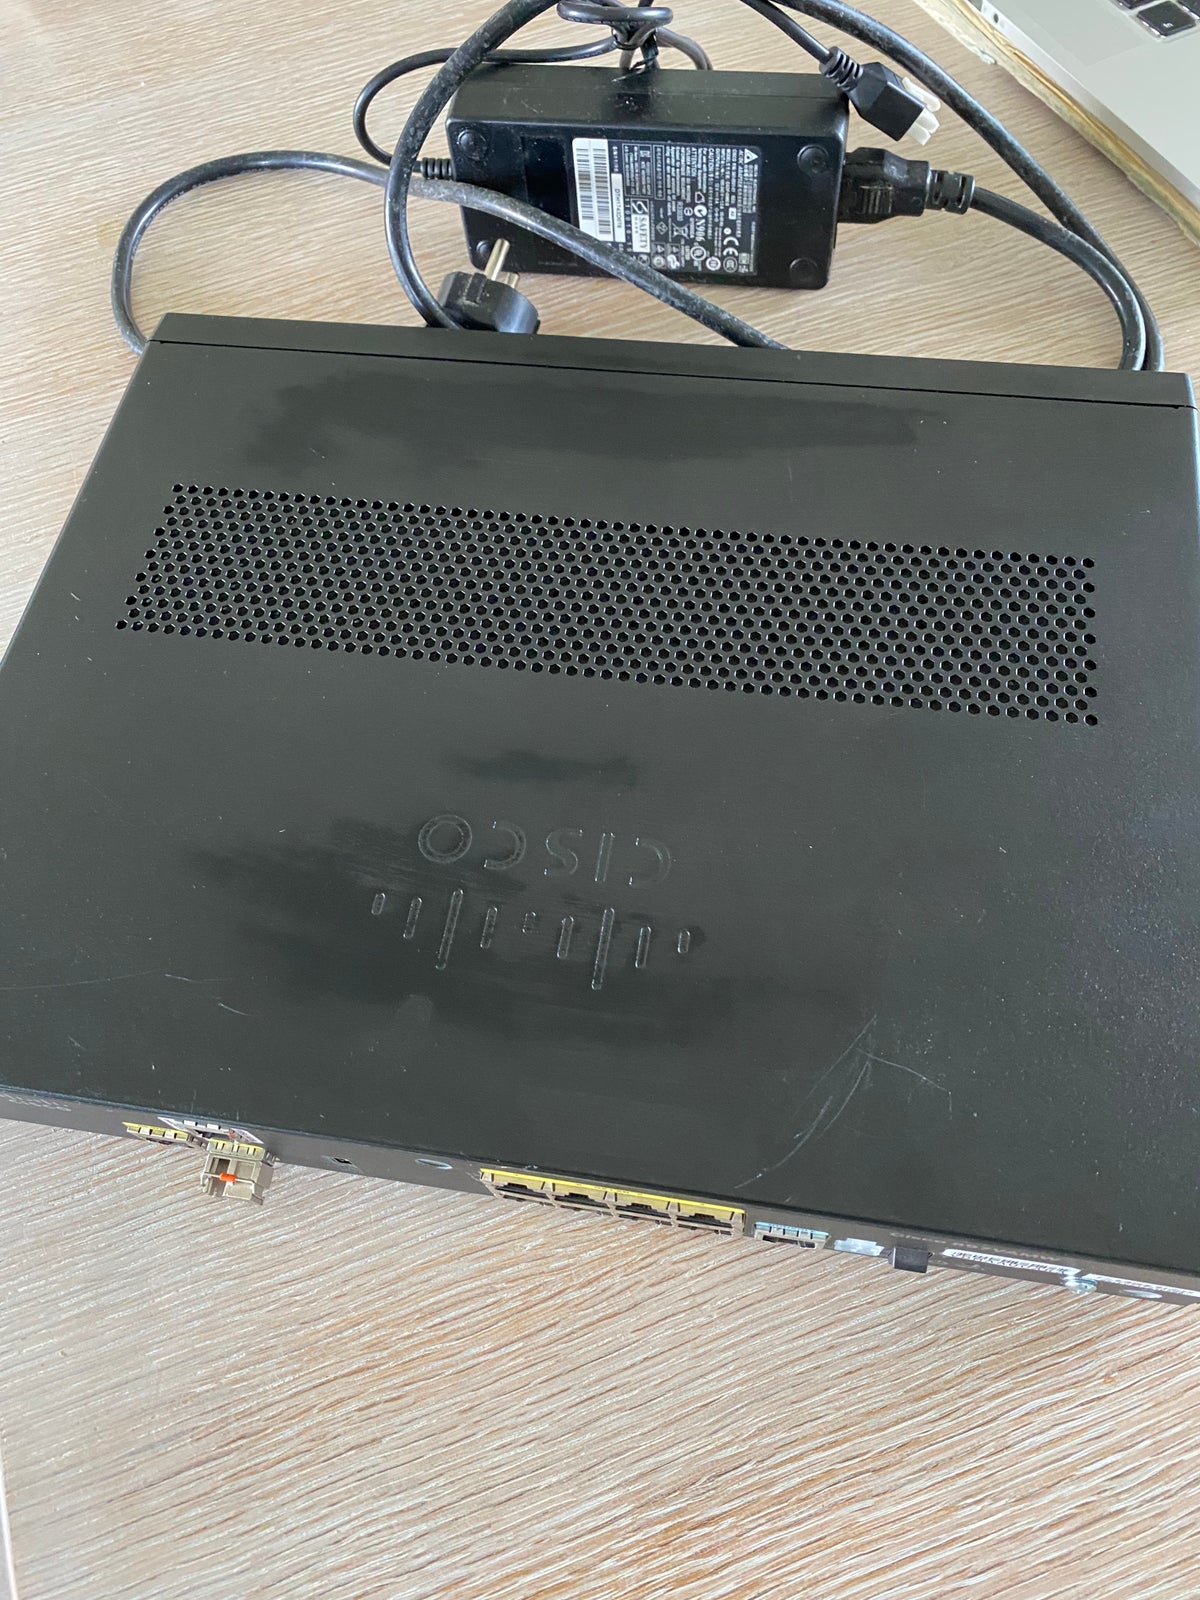 Router, Cisco 890 Series